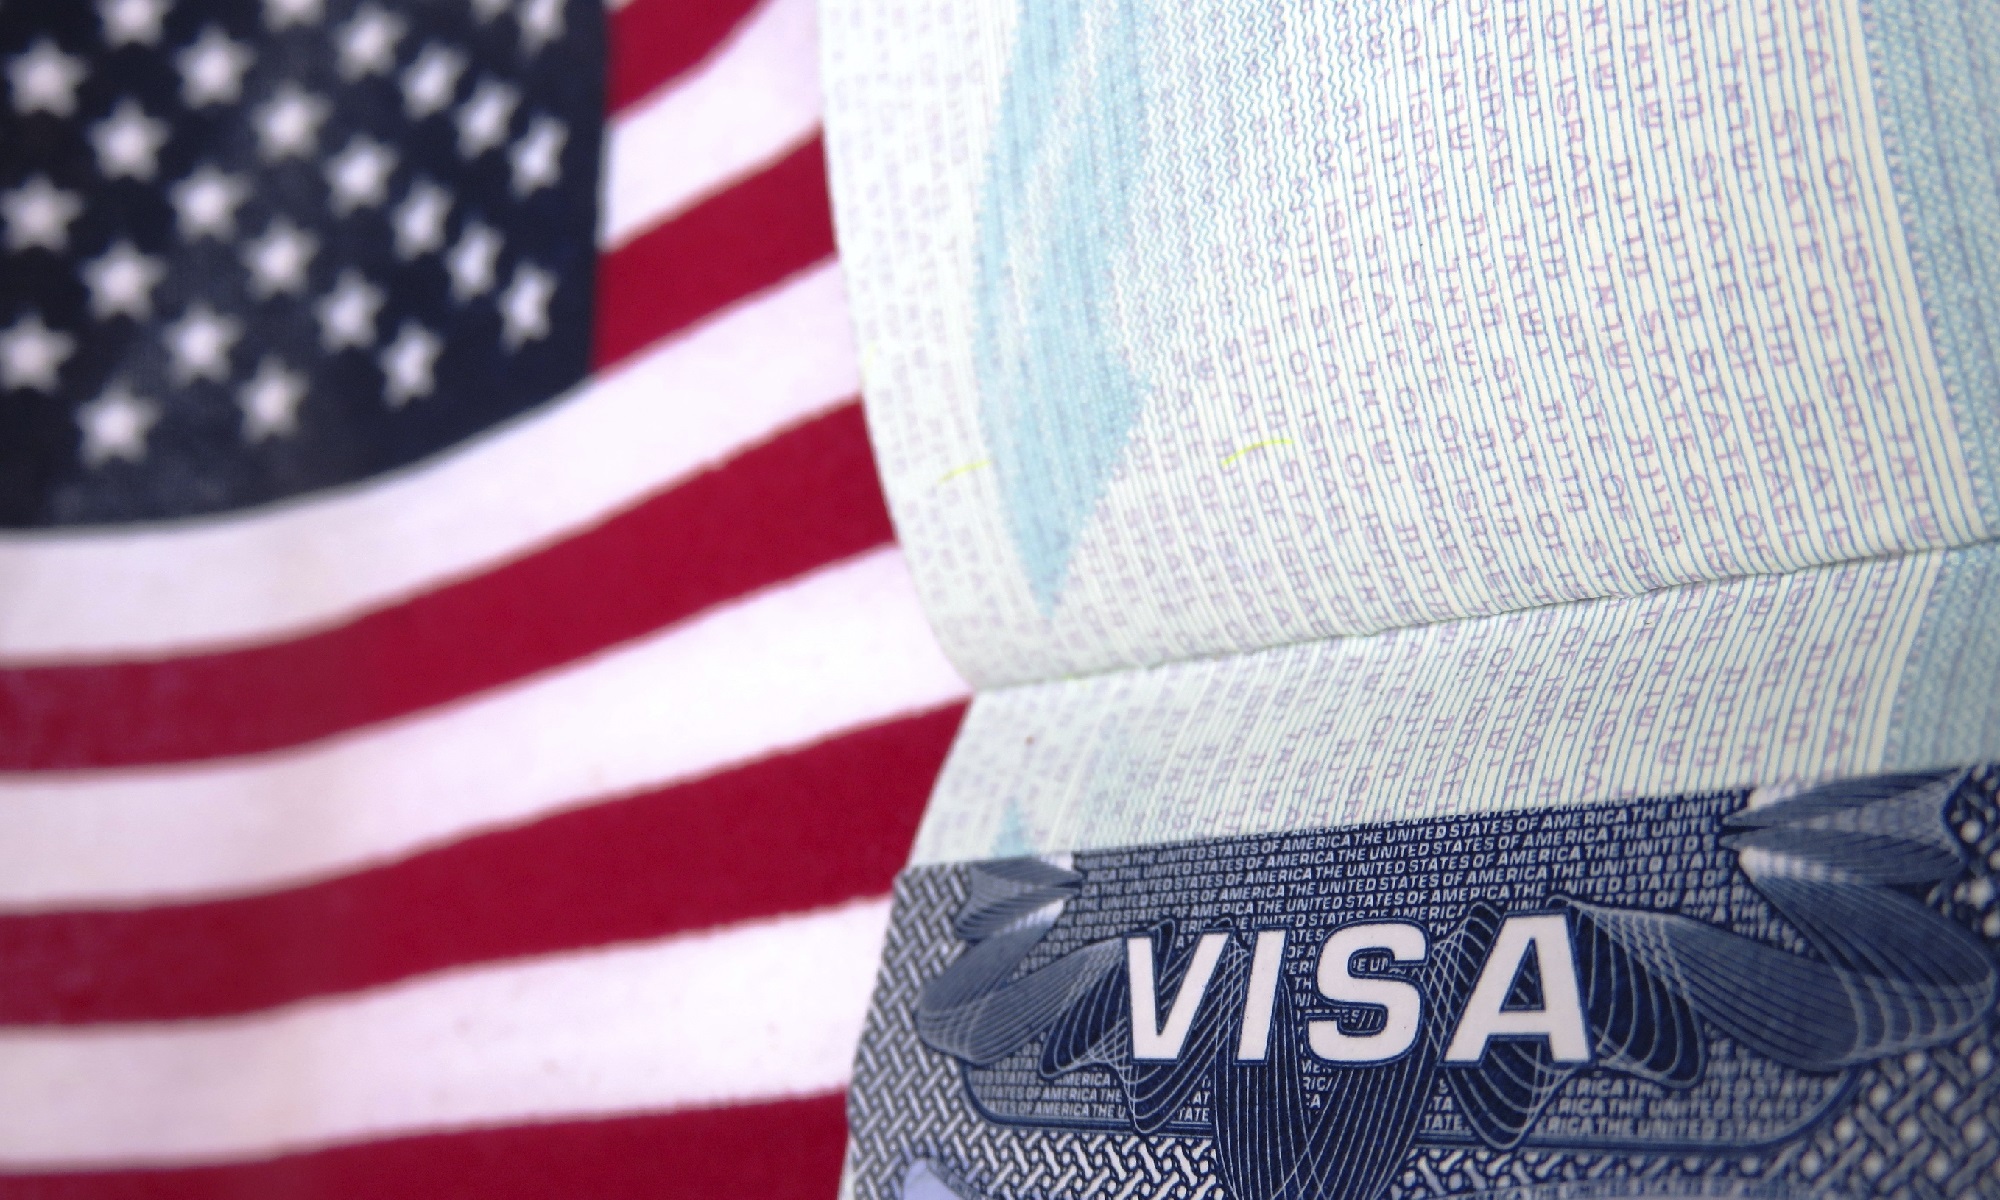 American visa and flag